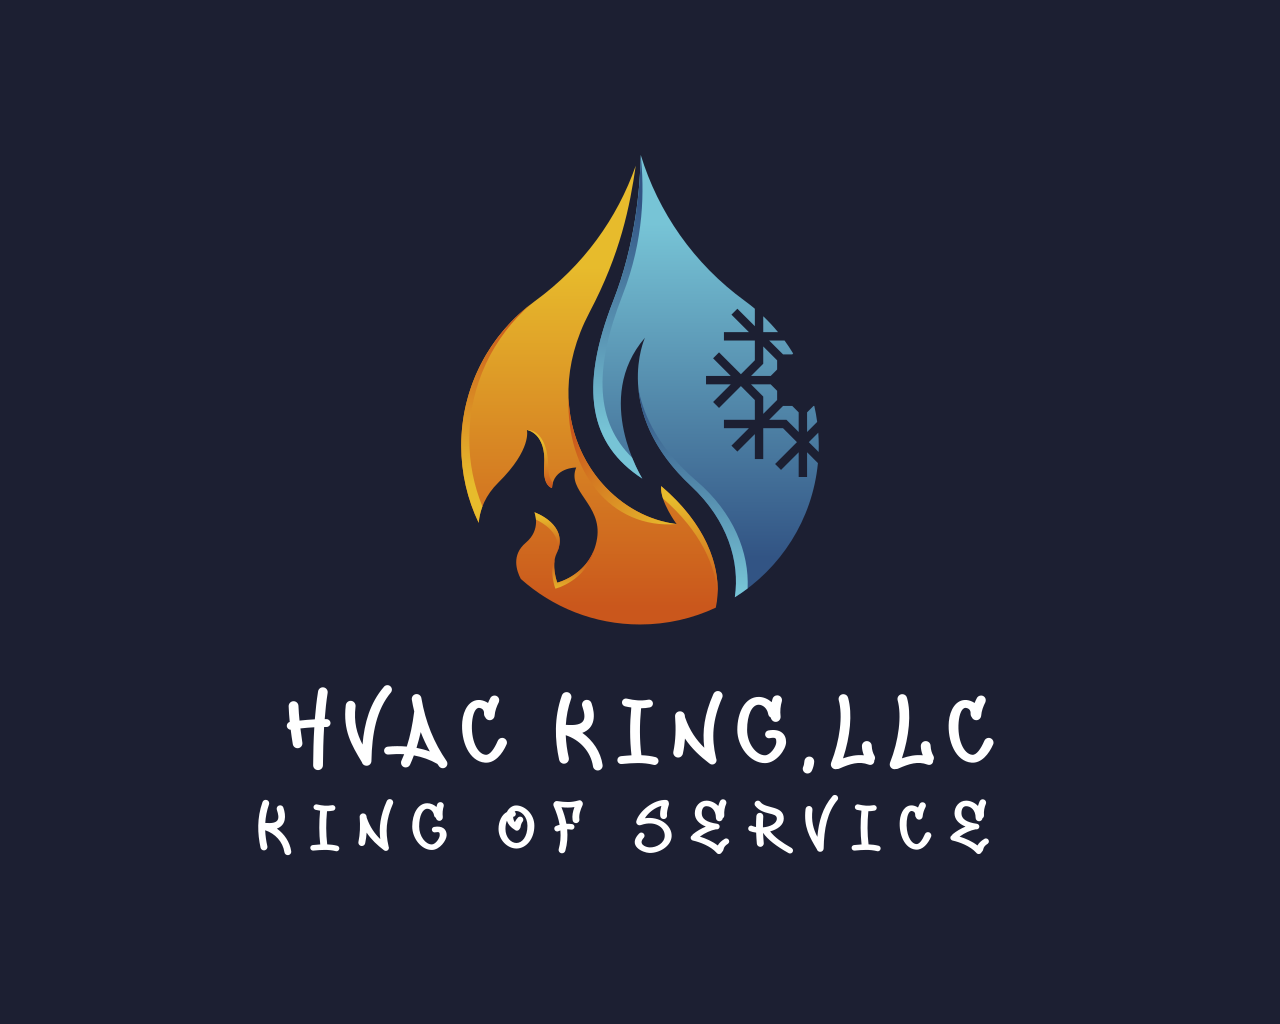 HVAC KING.LLC's web page